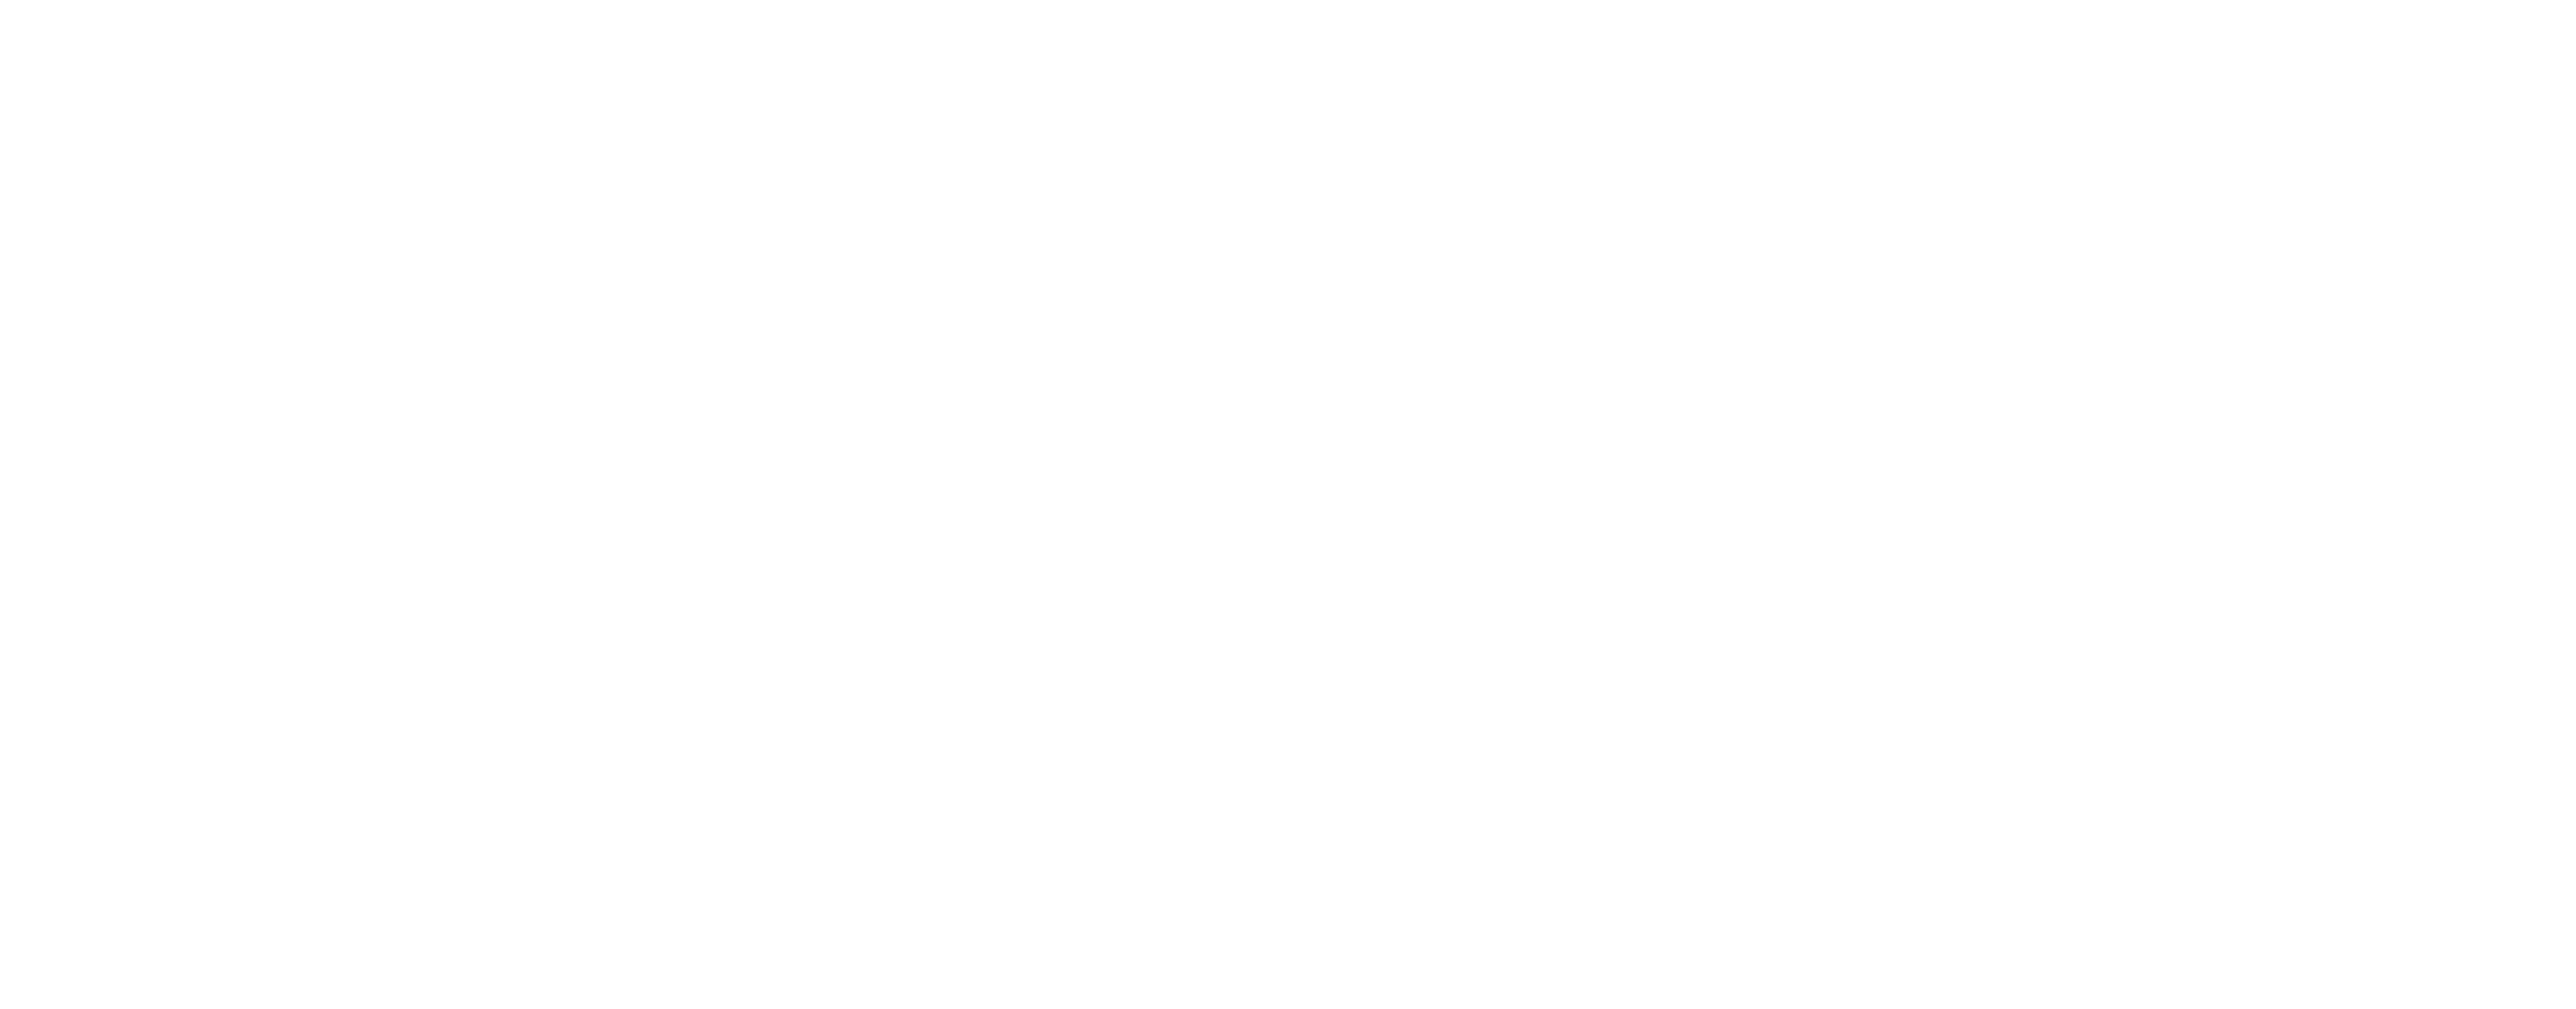 Logo Radio Campus France